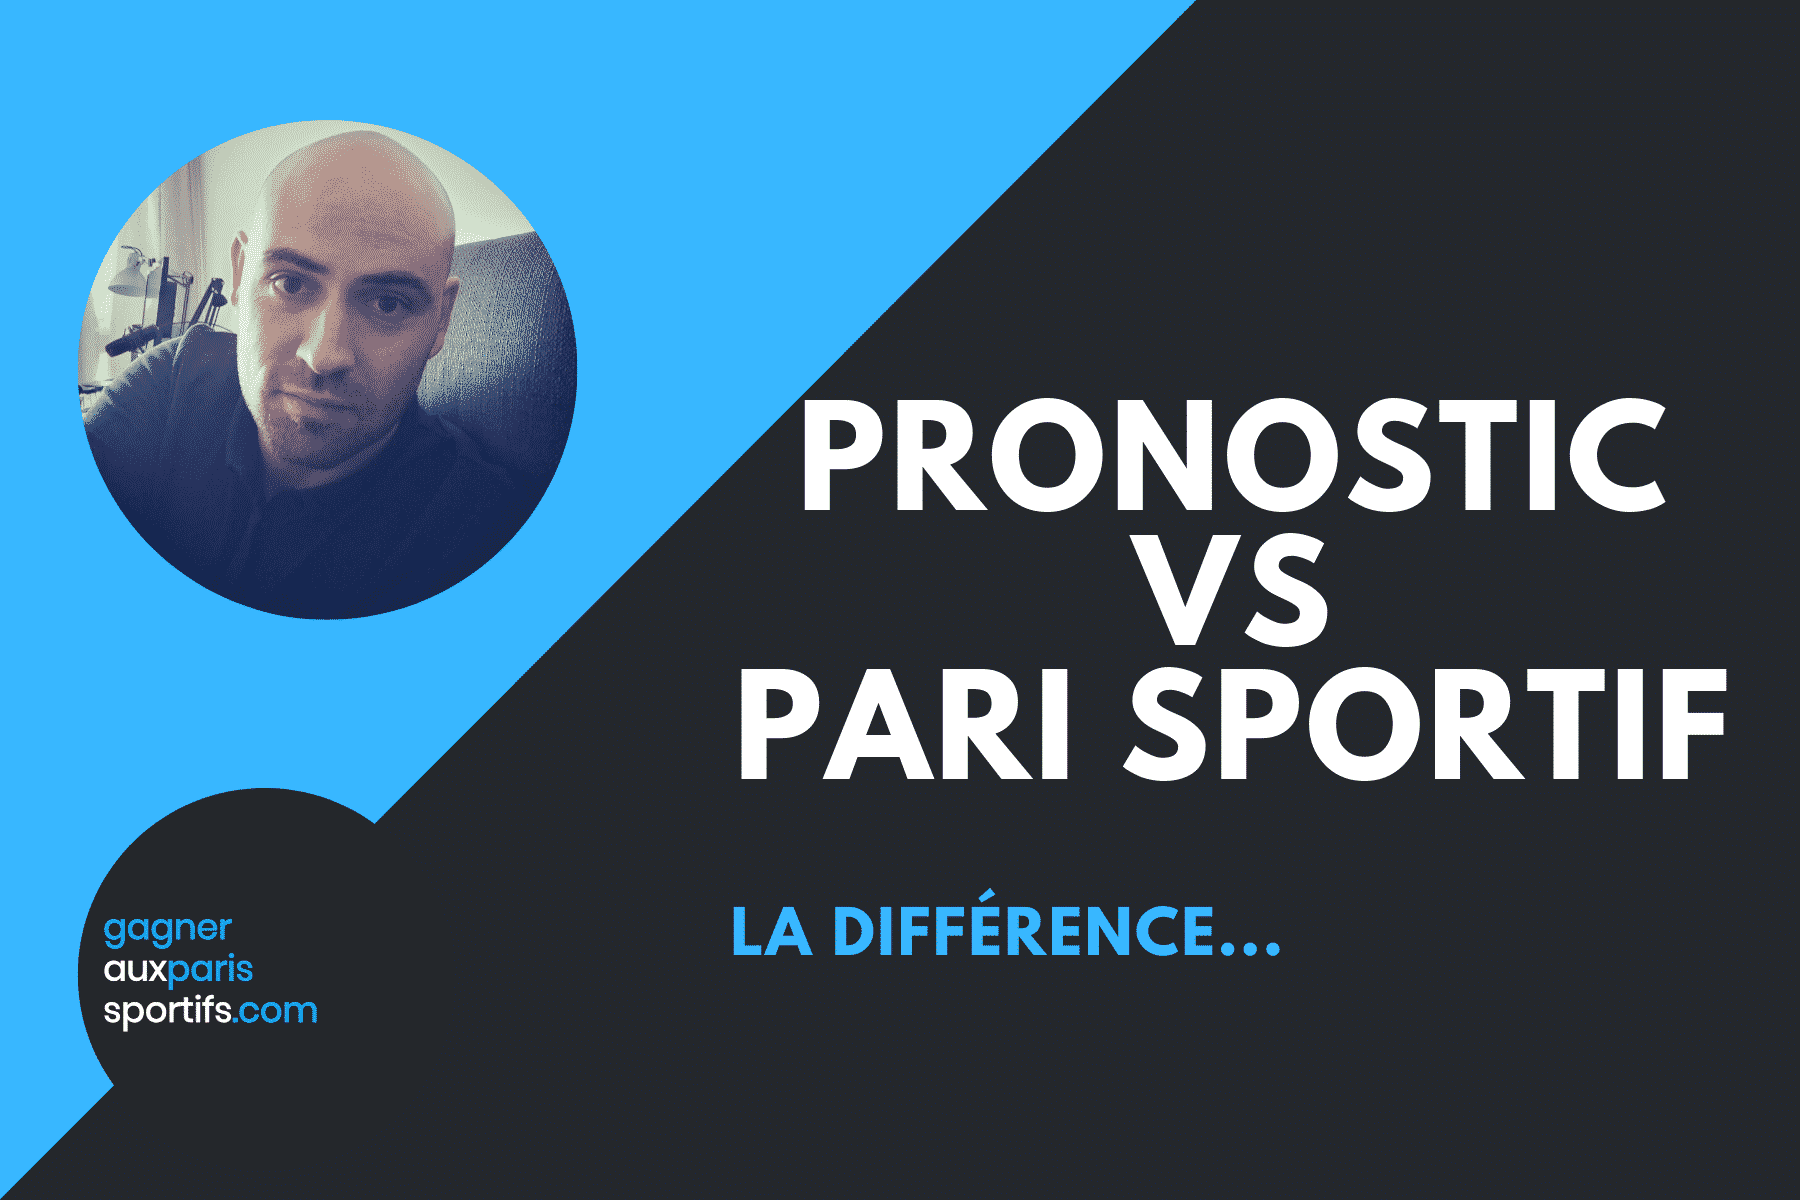 Pronostic vs Pari sportif La différence